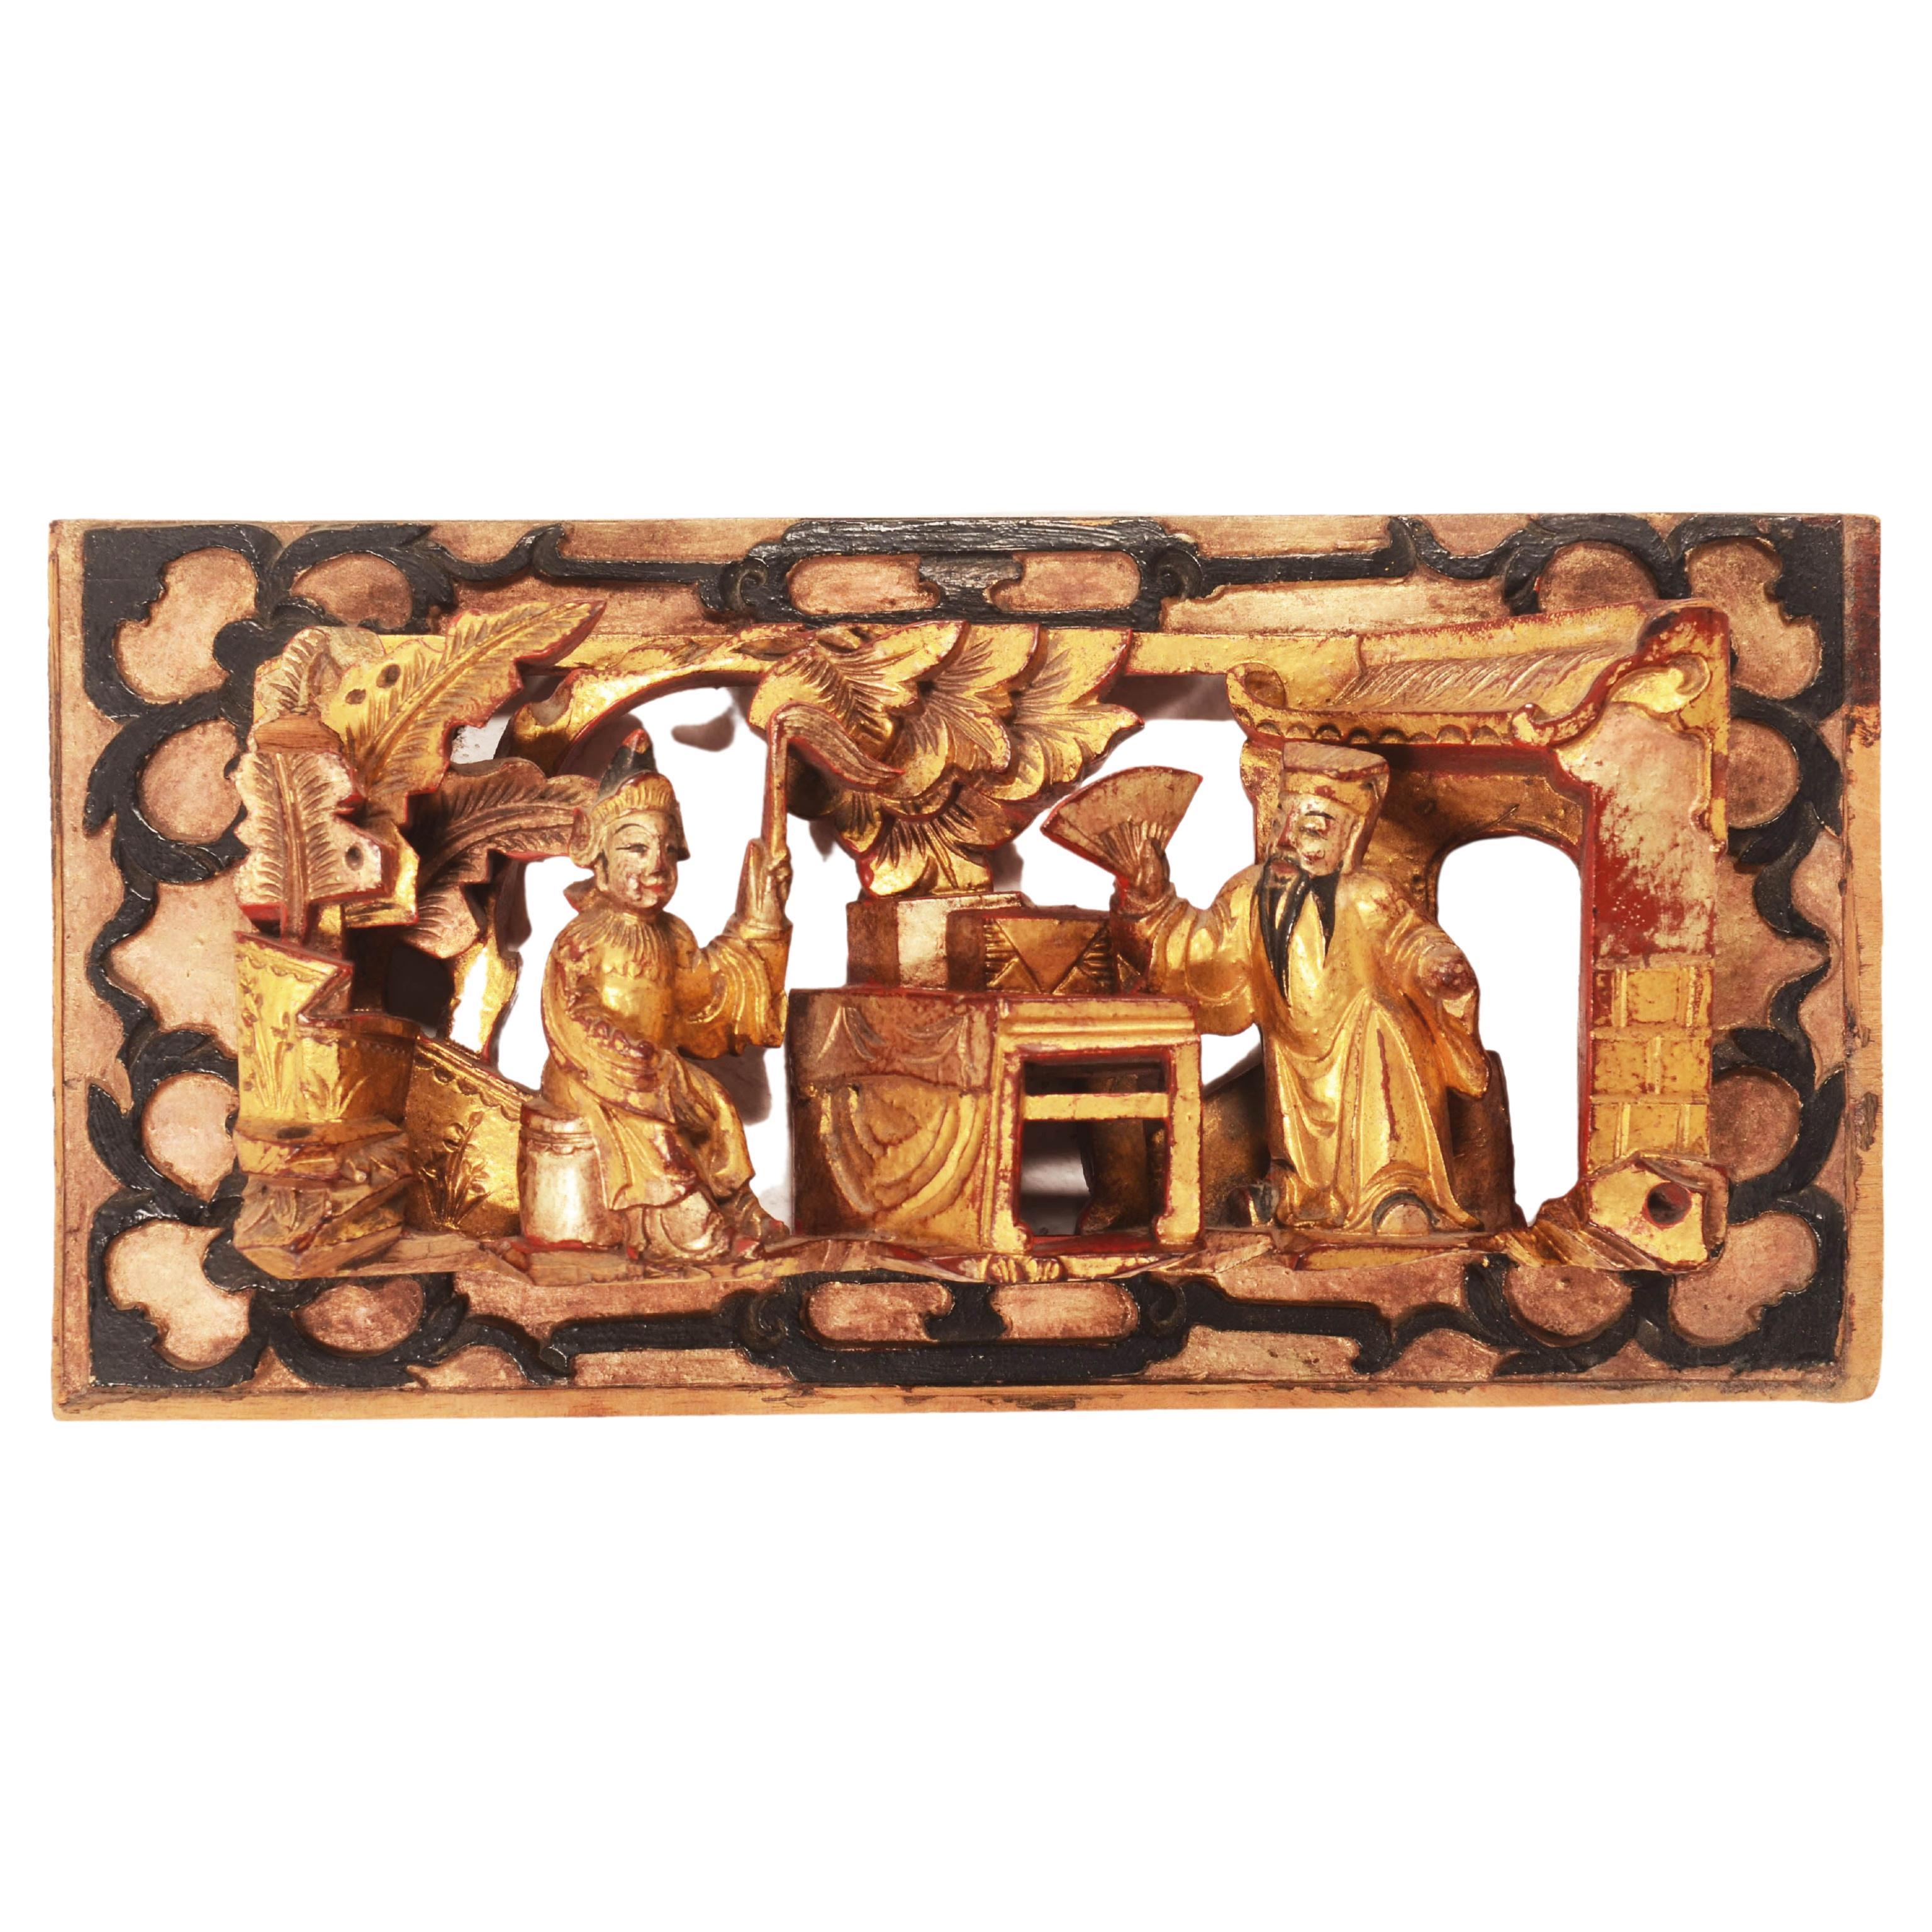 Chinesische geschnitzte Wandschnitzerei aus Holz mit vergoldeten Paneelen